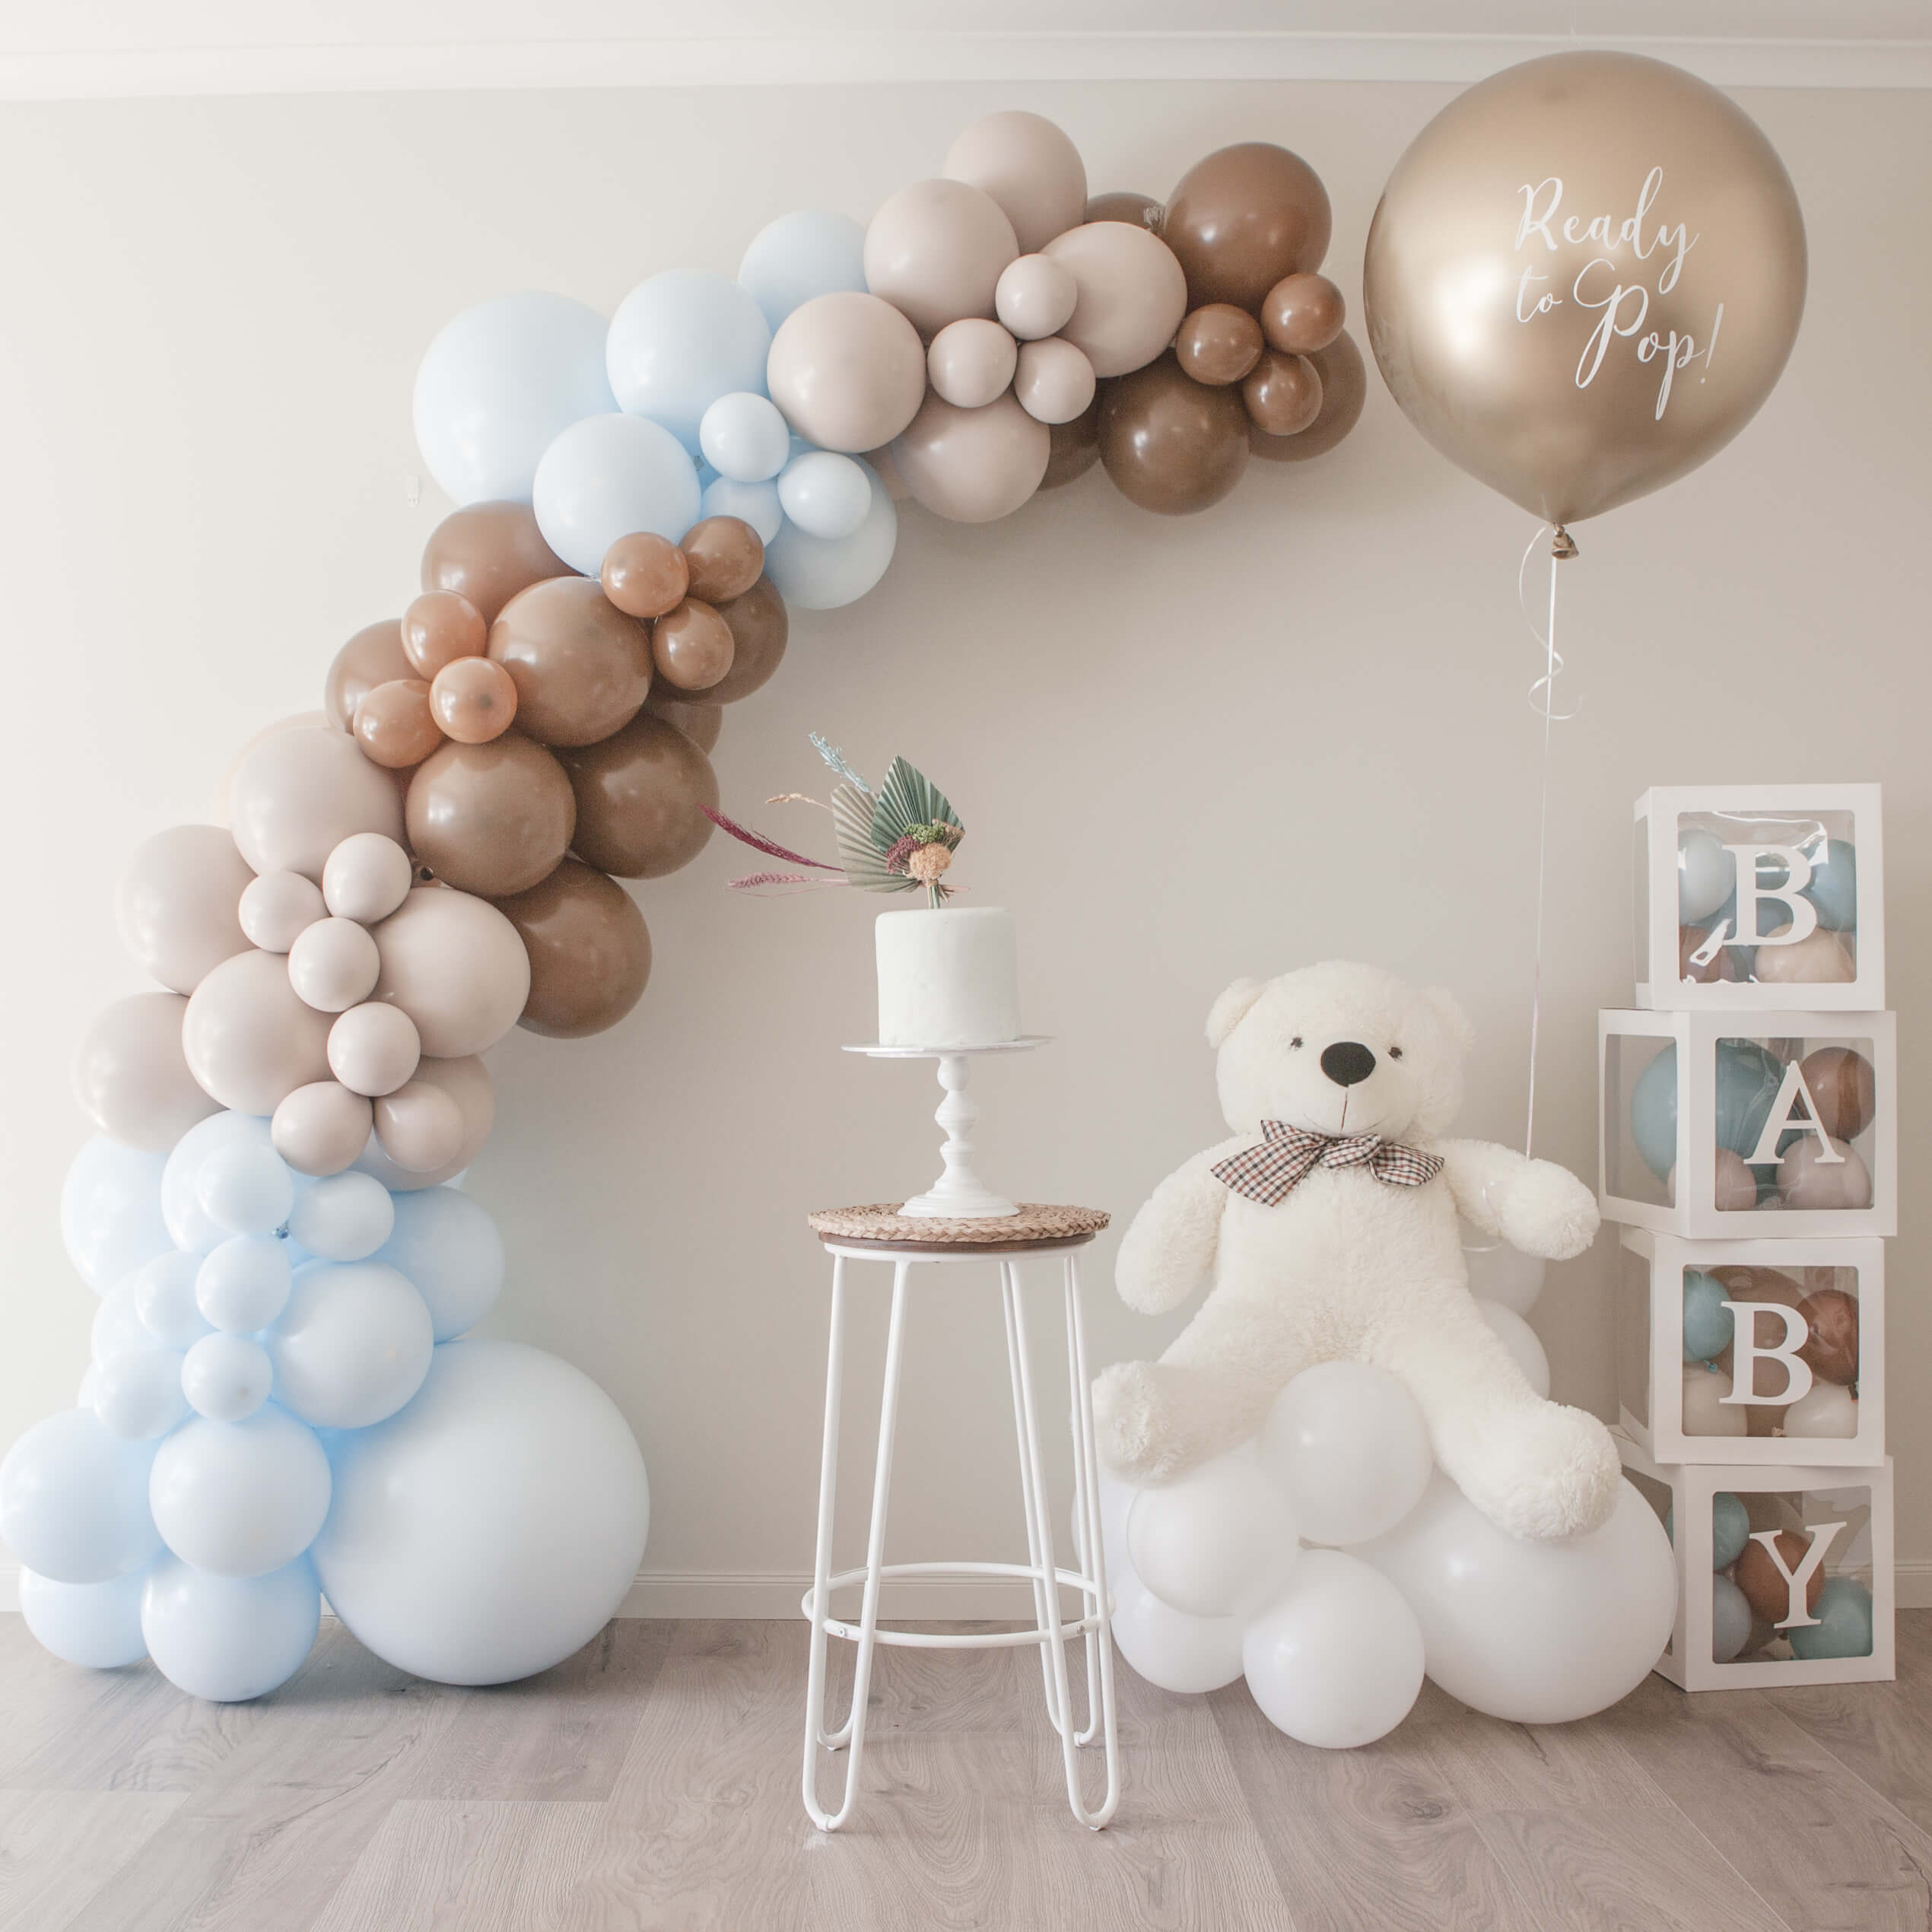 We Can't Bearly Wait Gender Reveal Balloon Garland DIY Kit - Pastel Blue & Brown